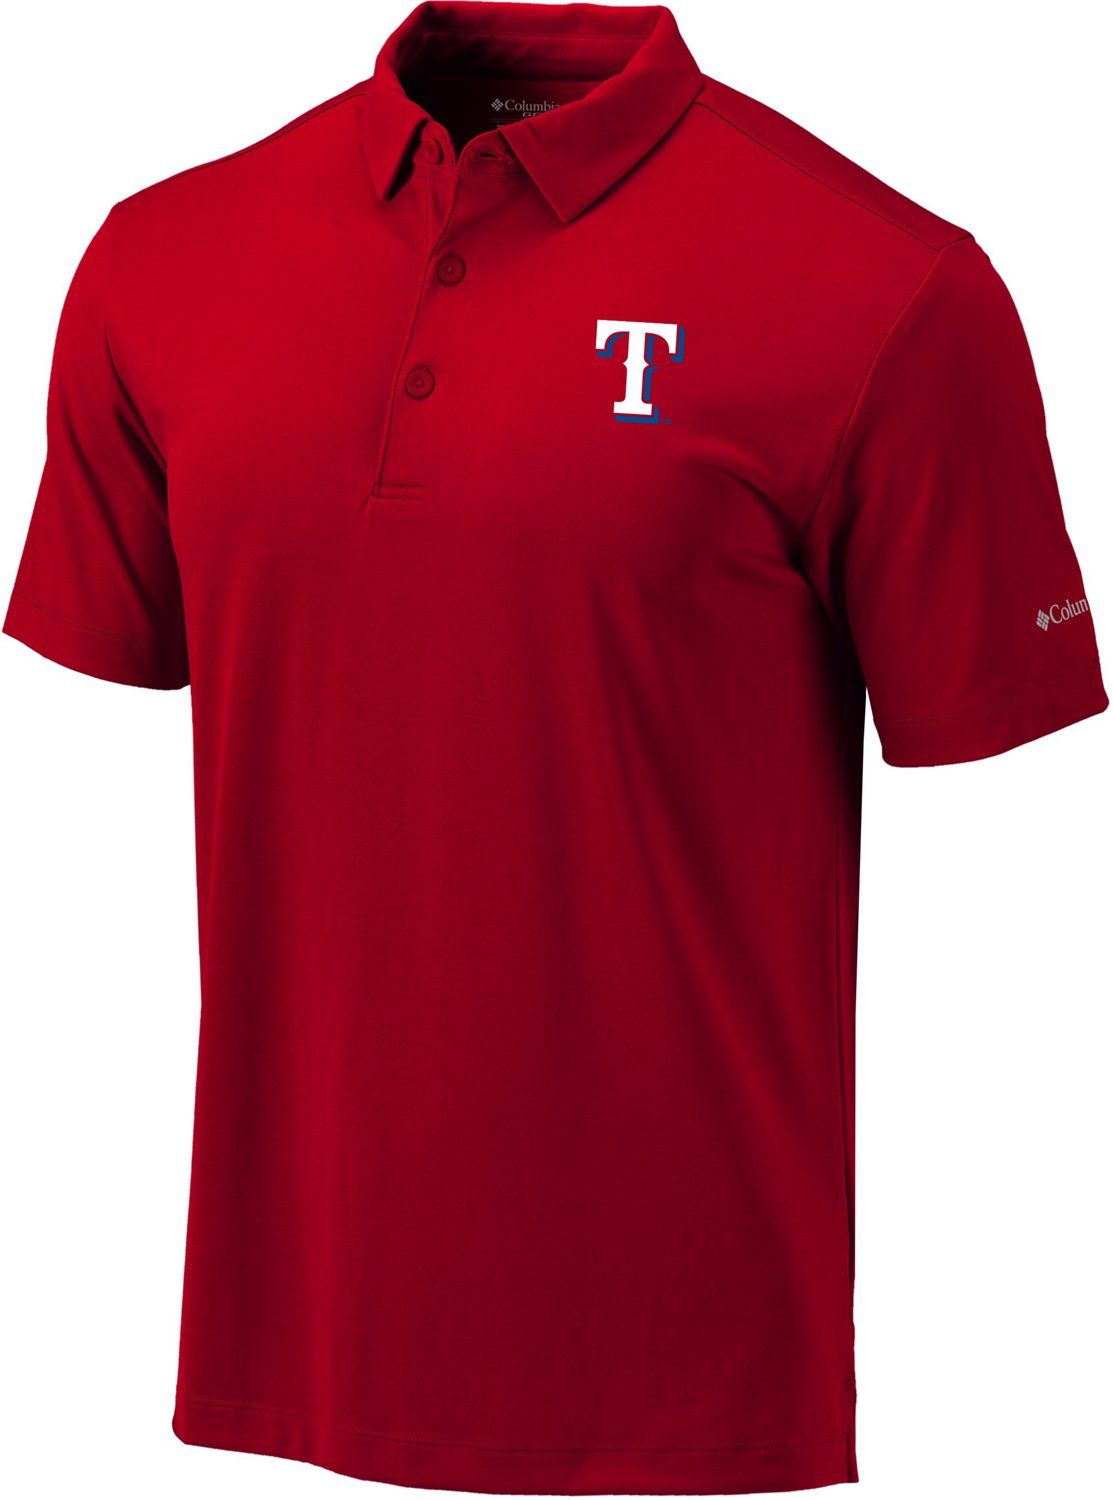 Columbia Sportswear Men's Texas Rangers Drive Polo Shirt